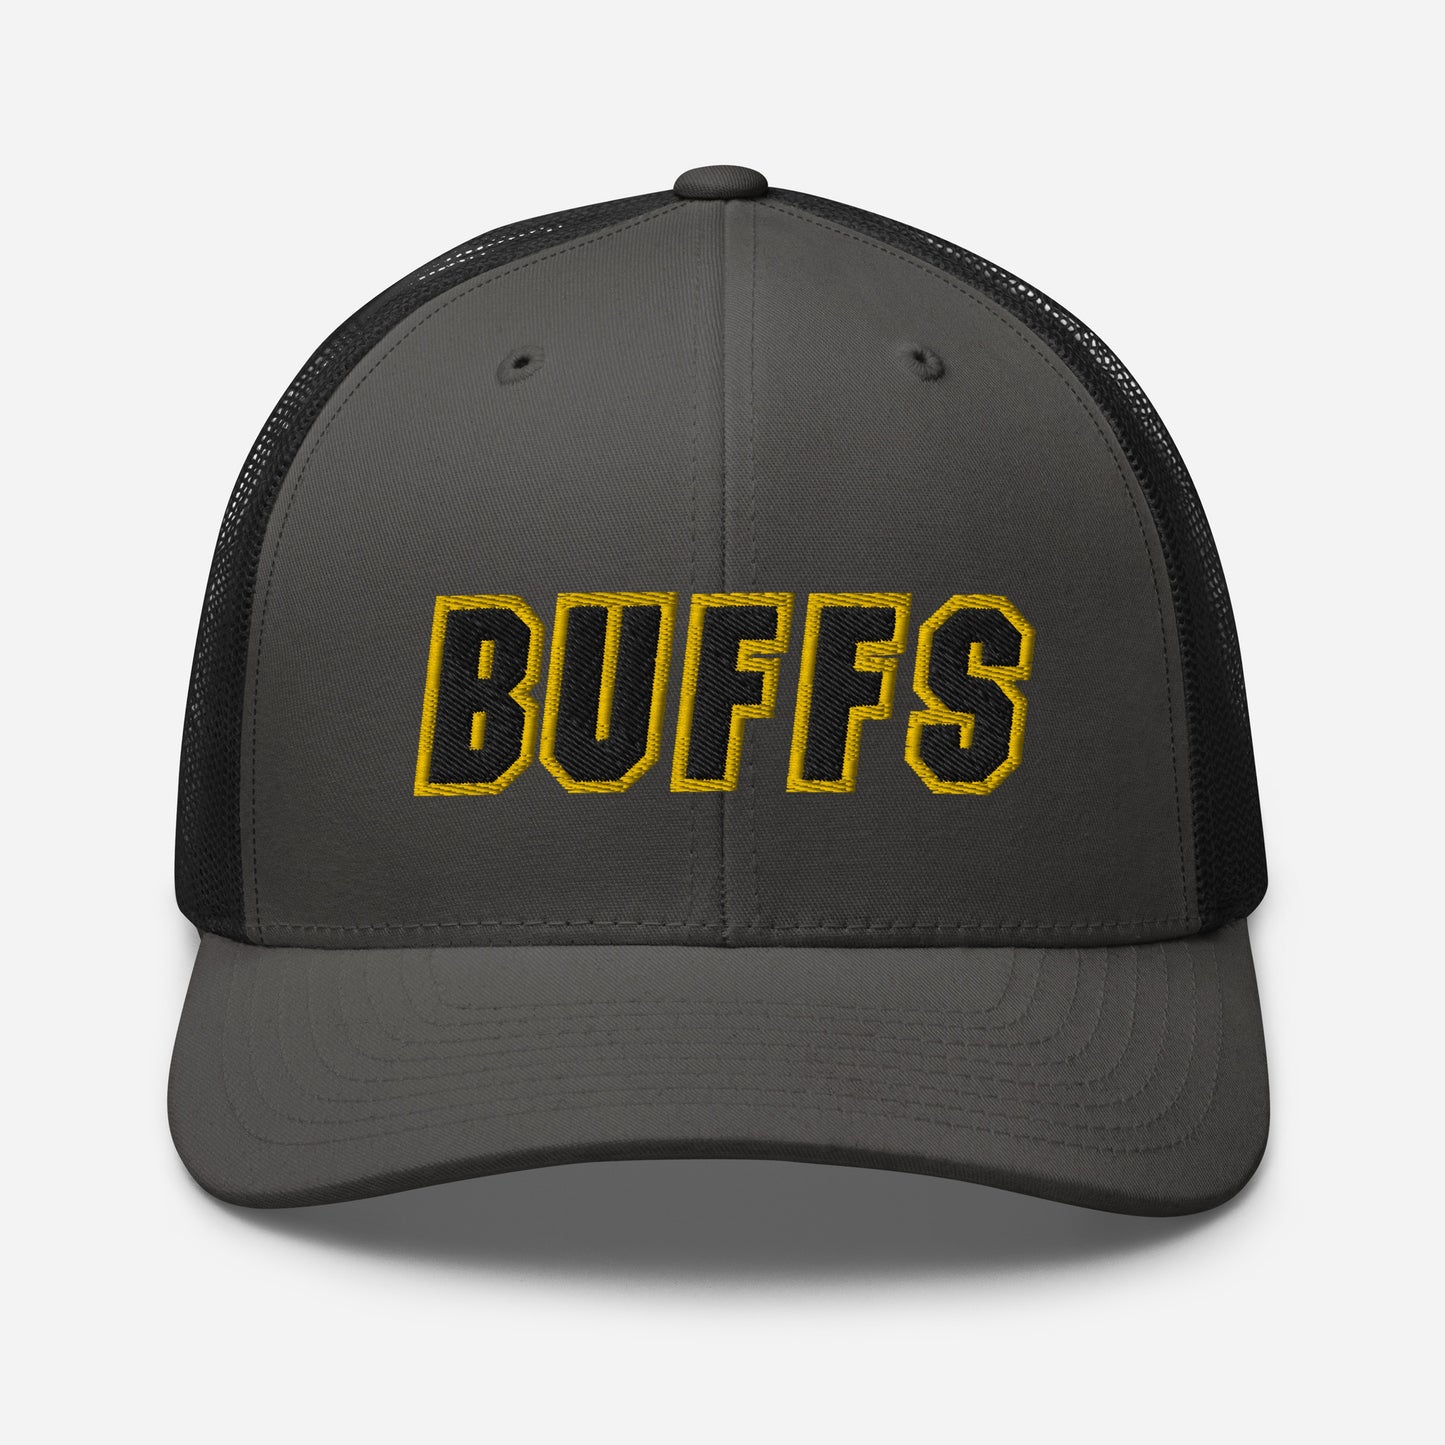 Colorado Trucker Hat: Buffs